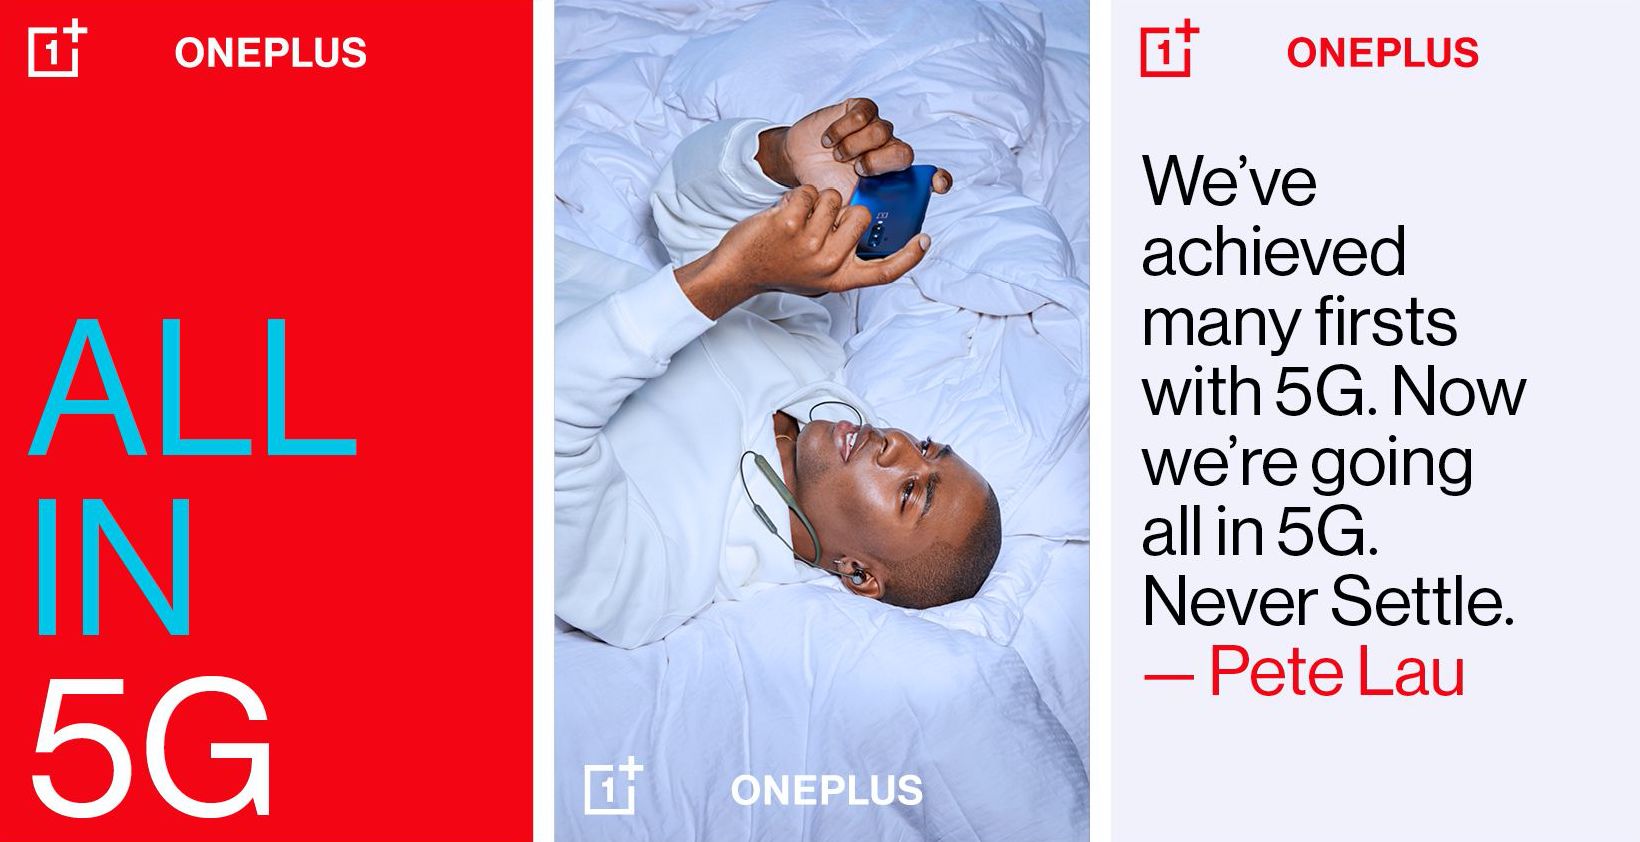 OnePlus unveils new brand visual identity